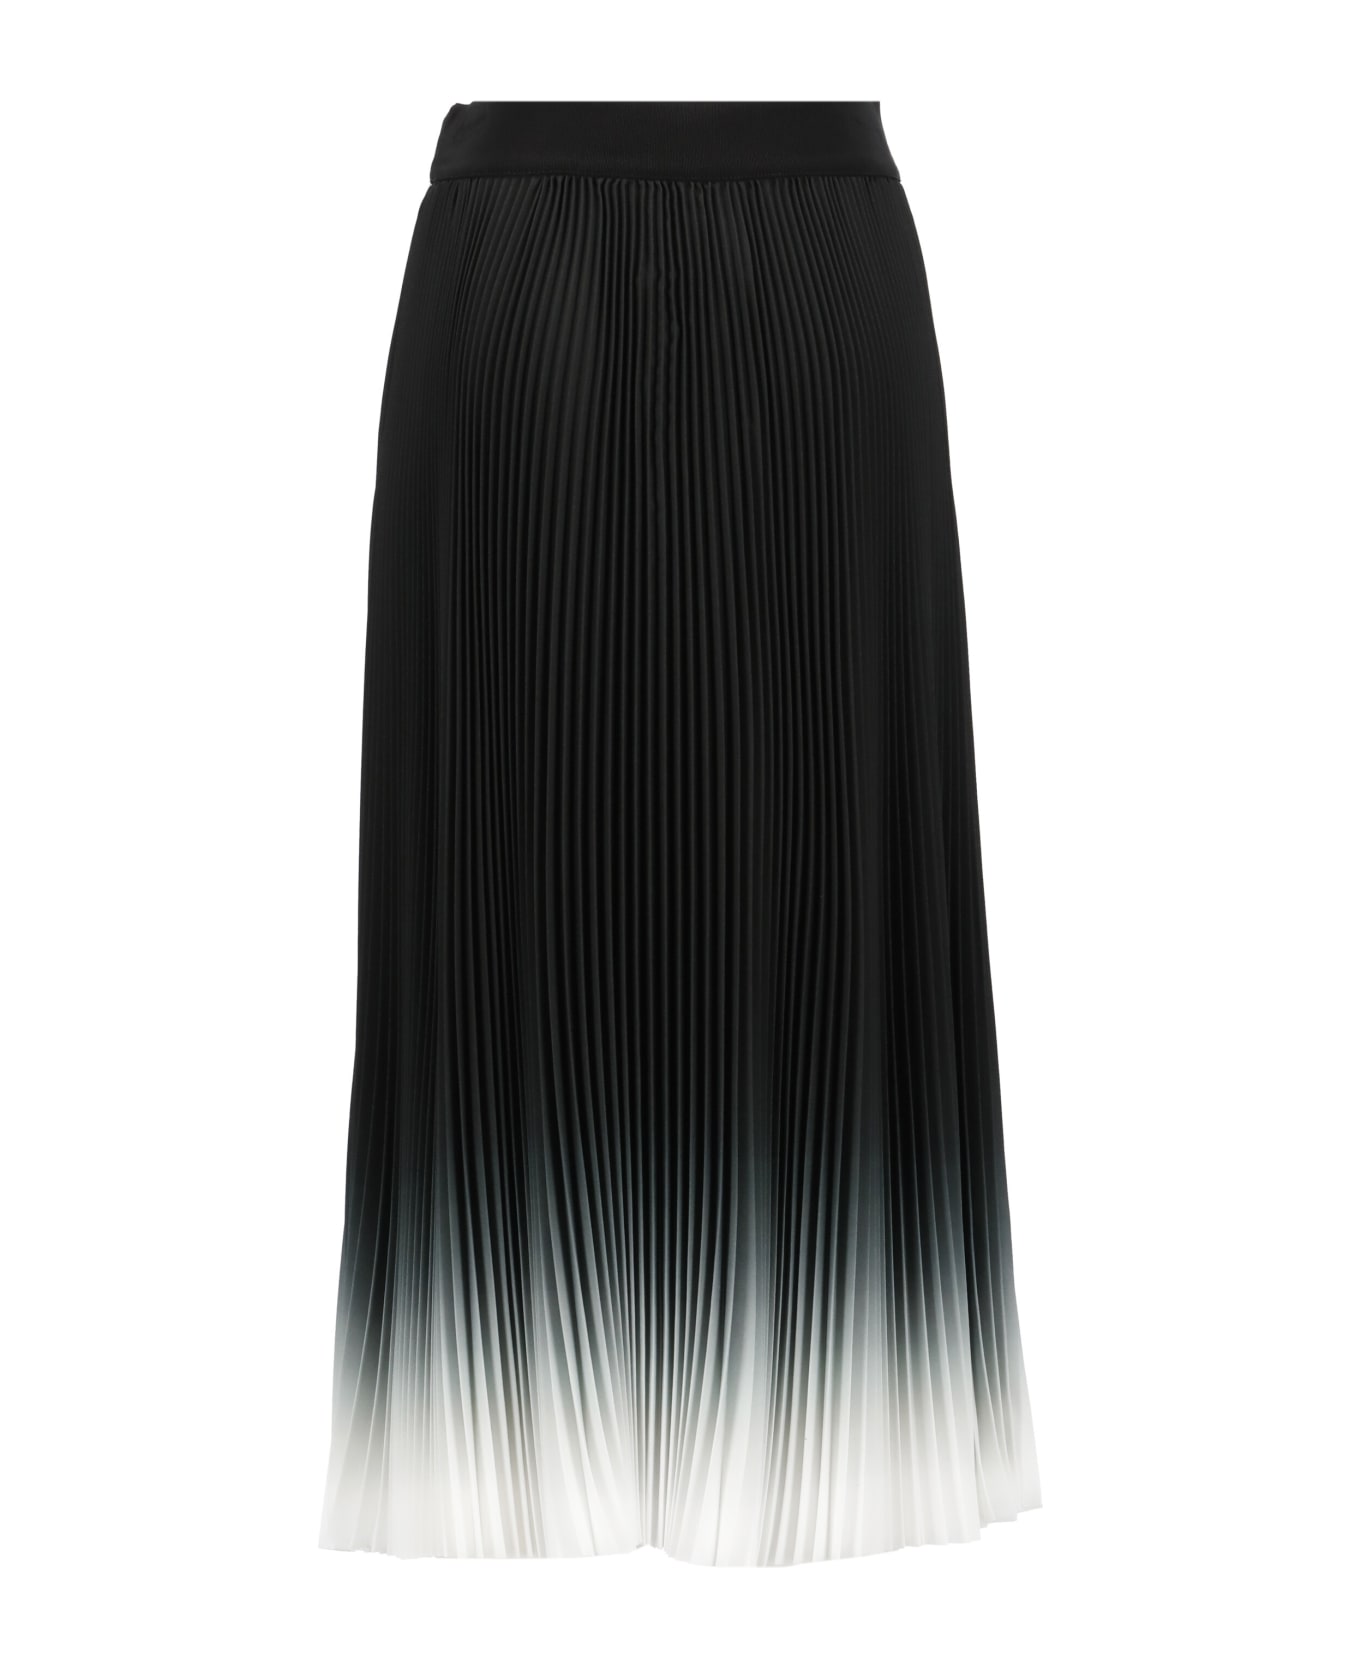 Herno Crepe Skirt - Black スカート